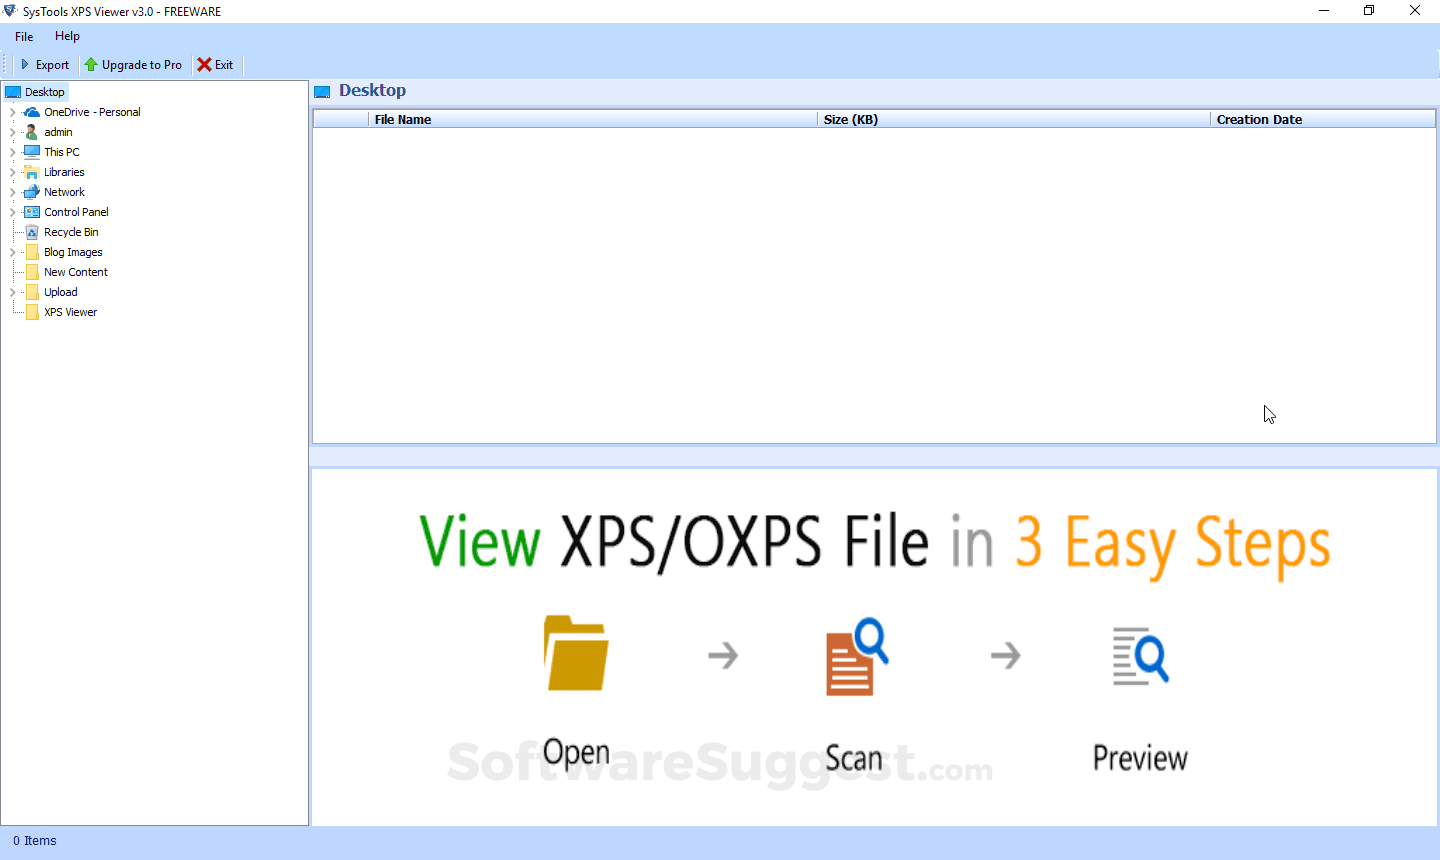 download xps viewer windows 10